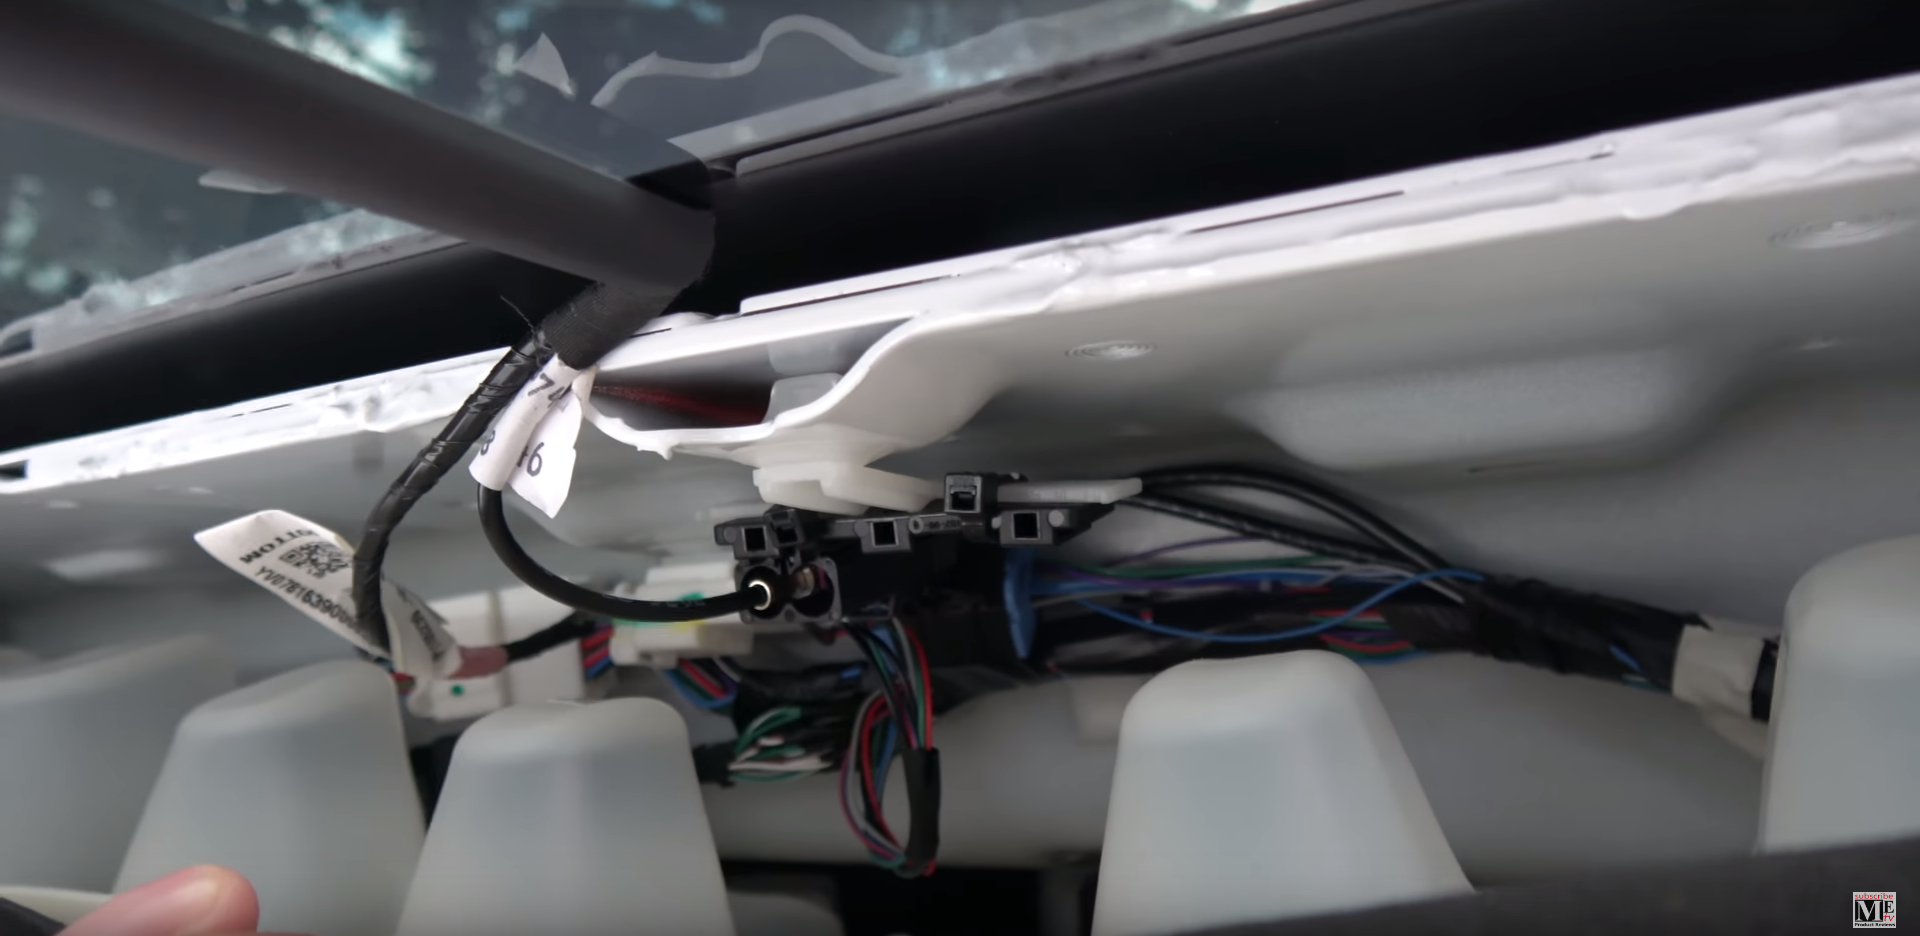 Tesla wiring harness model x